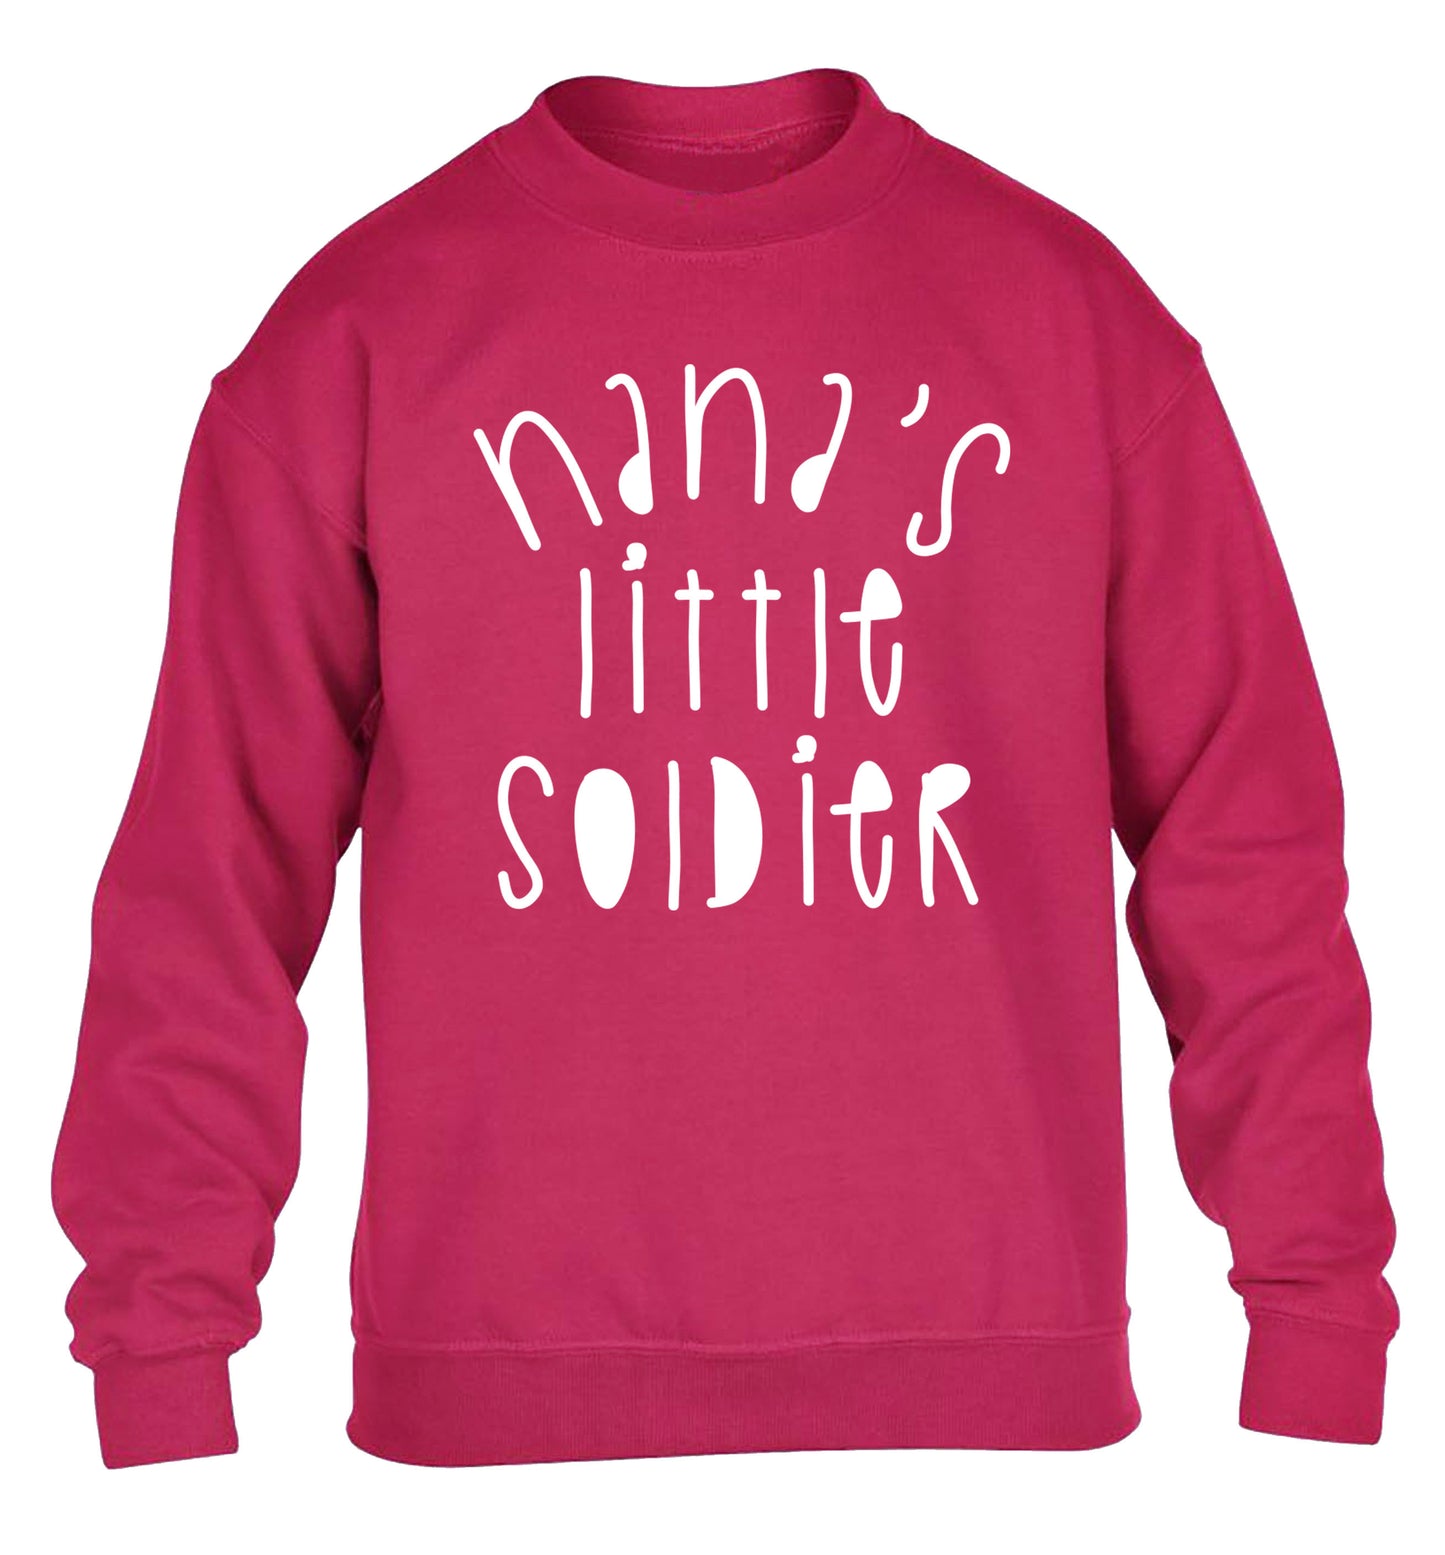 Nana's little soldier children's pink sweater 12-14 Years